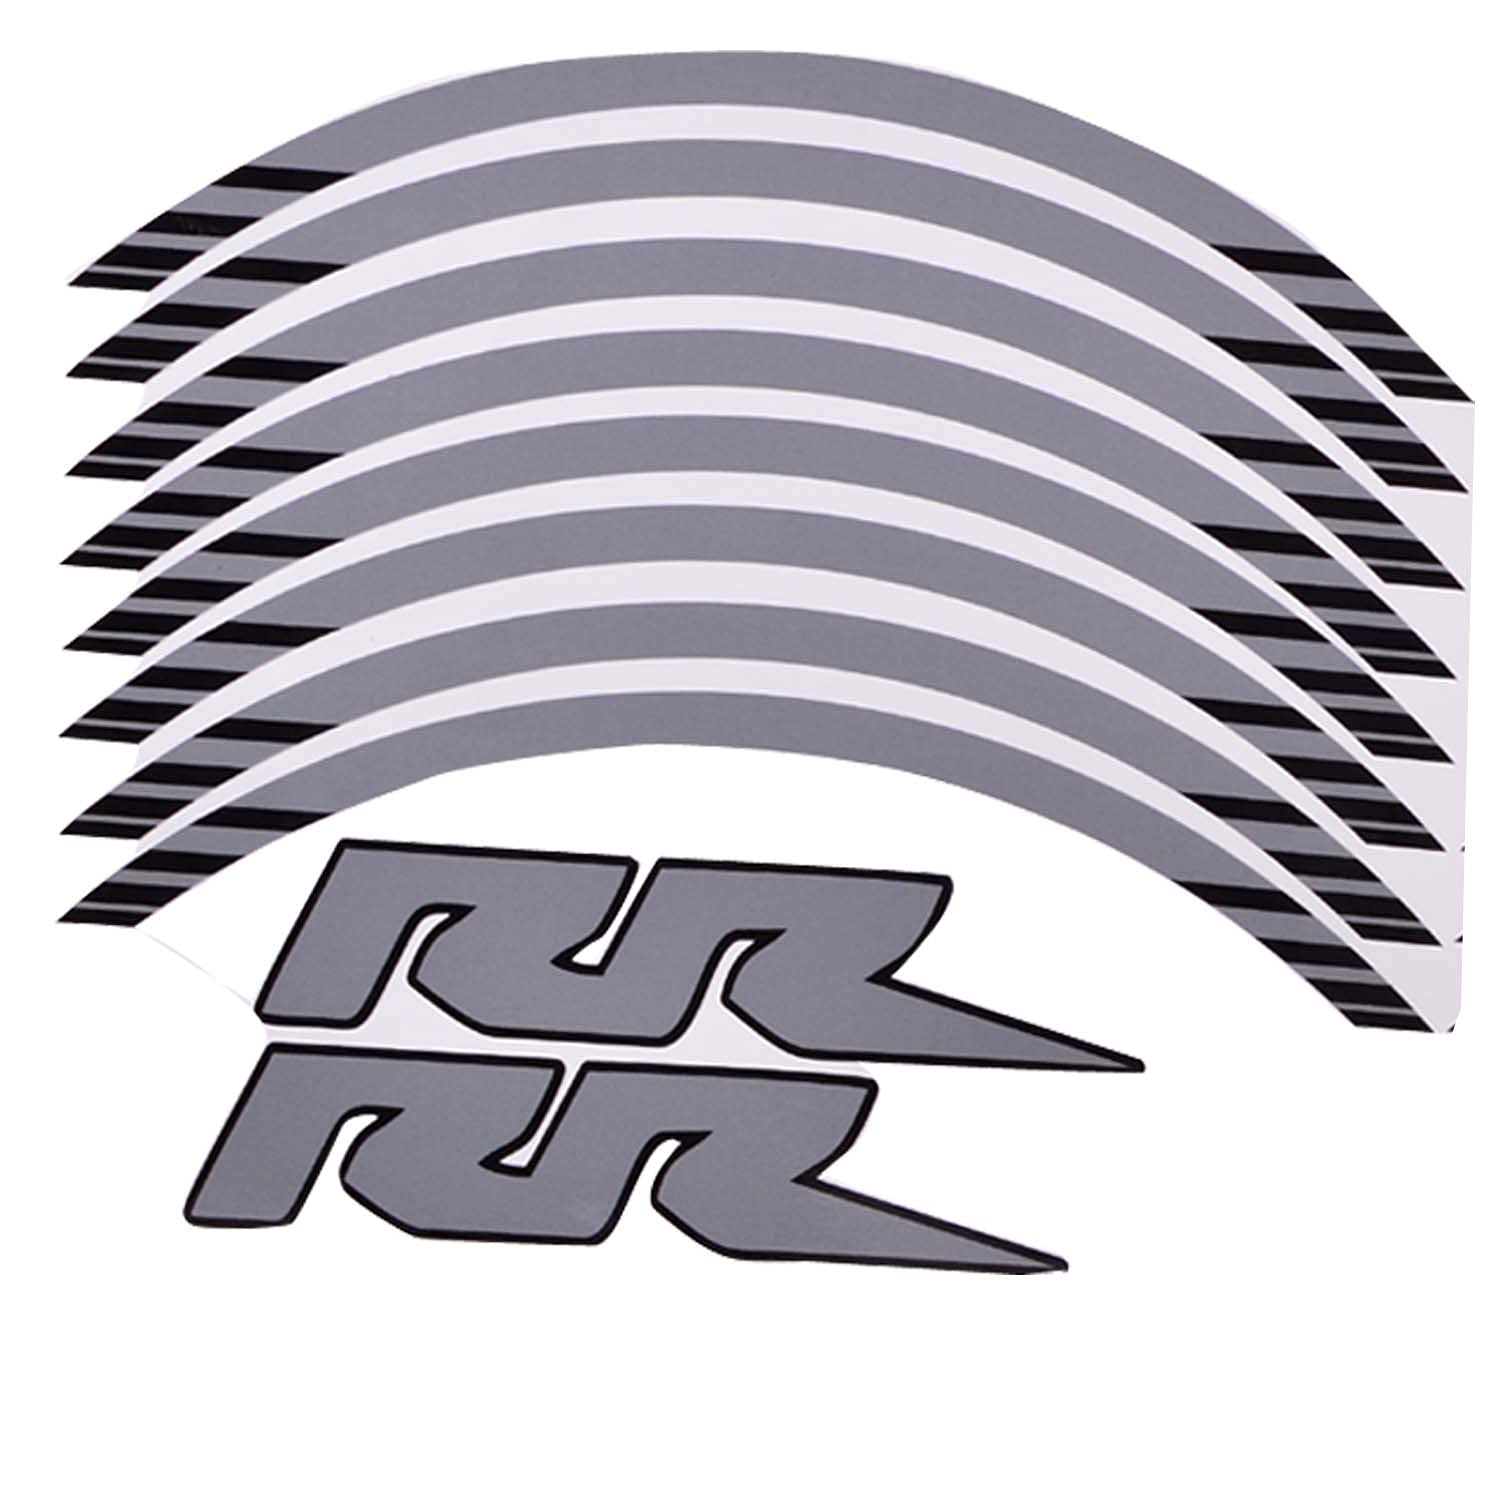 File:IVTS Logo.jpg - Wikimedia Commons